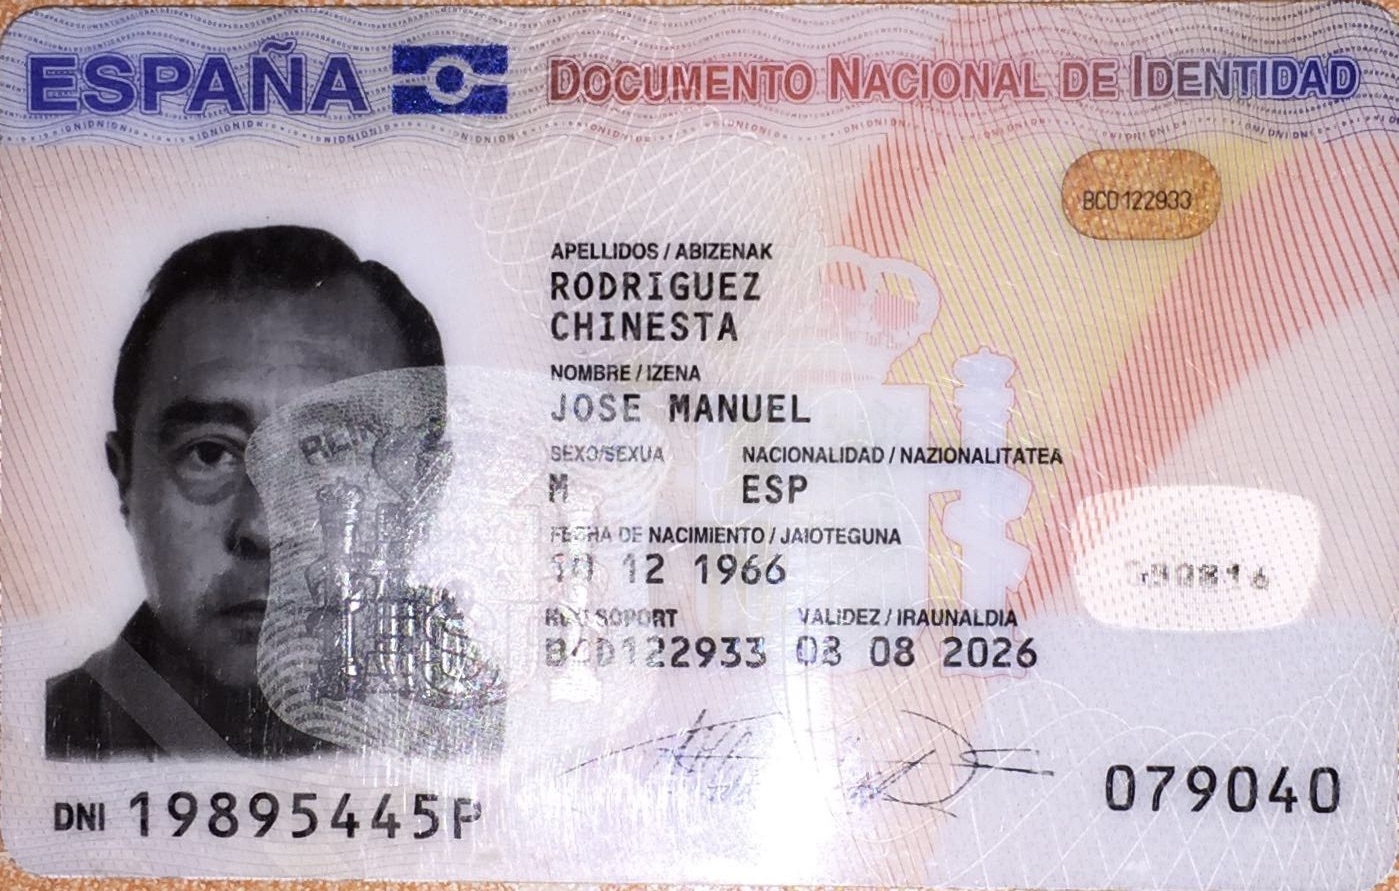 JOSE MANUEL RODRIGUEZ CHINESTA